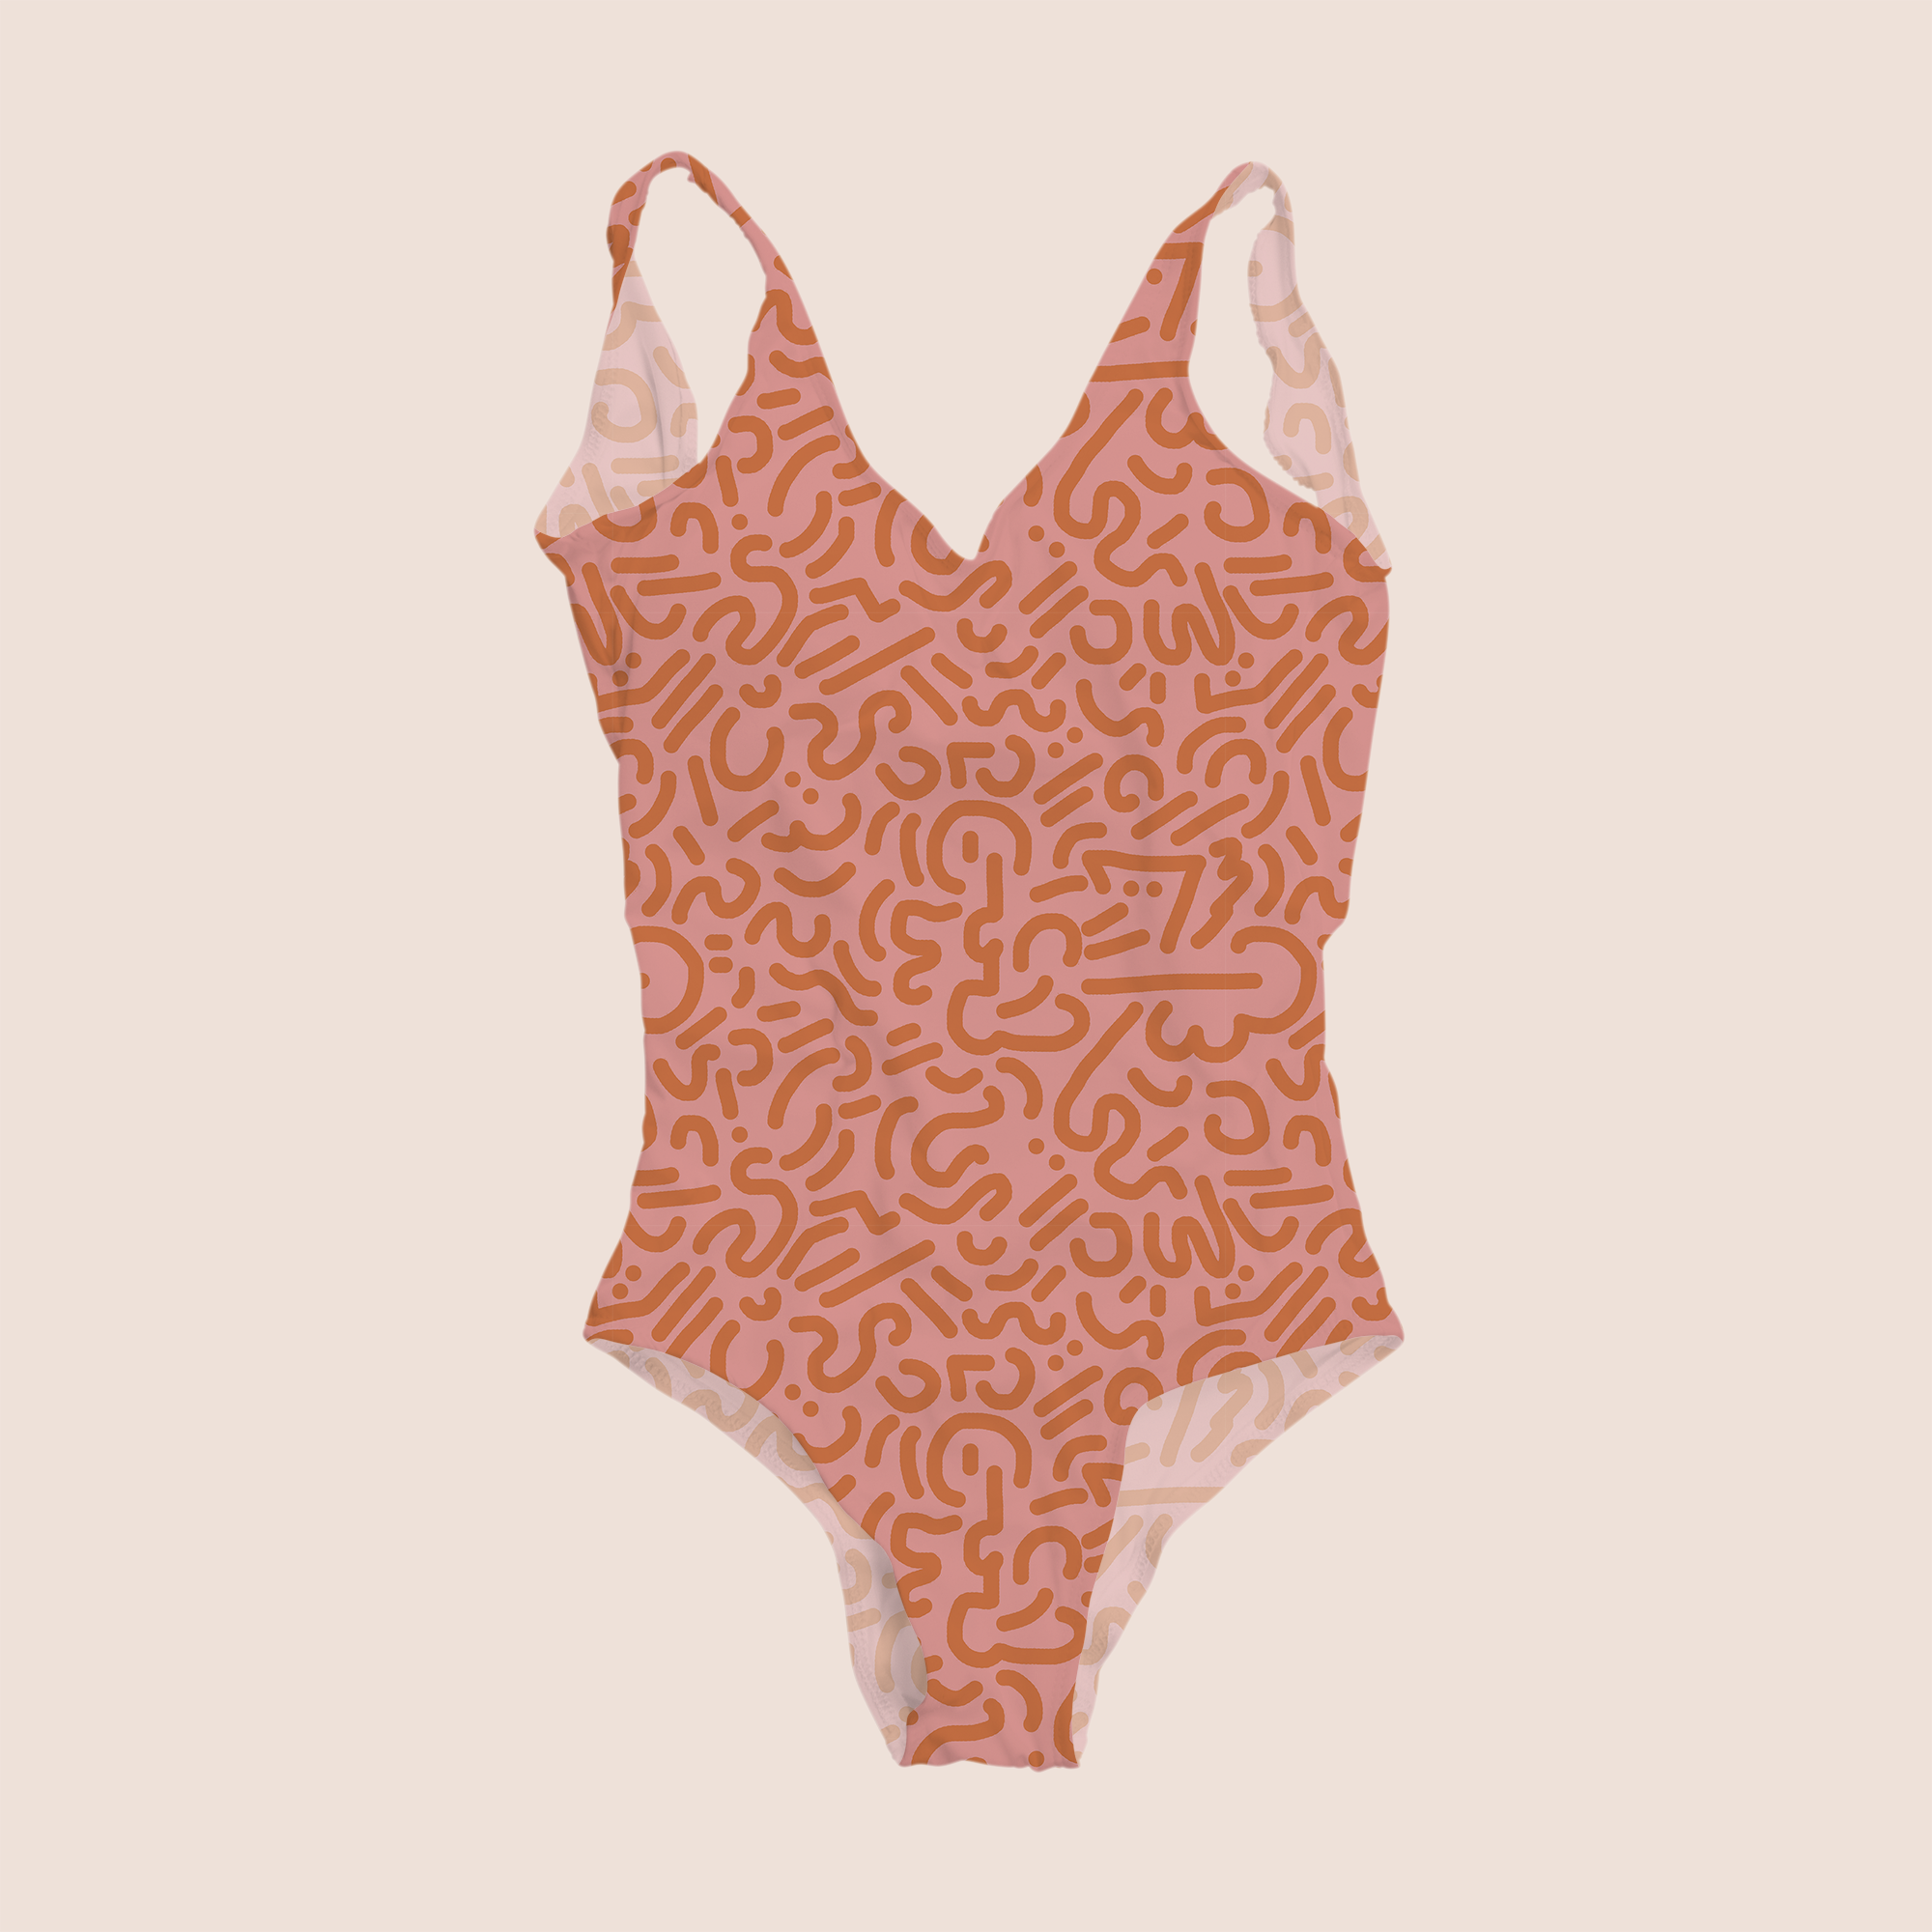 Art millennial II pattern design on recycled fabric swimwear mockup